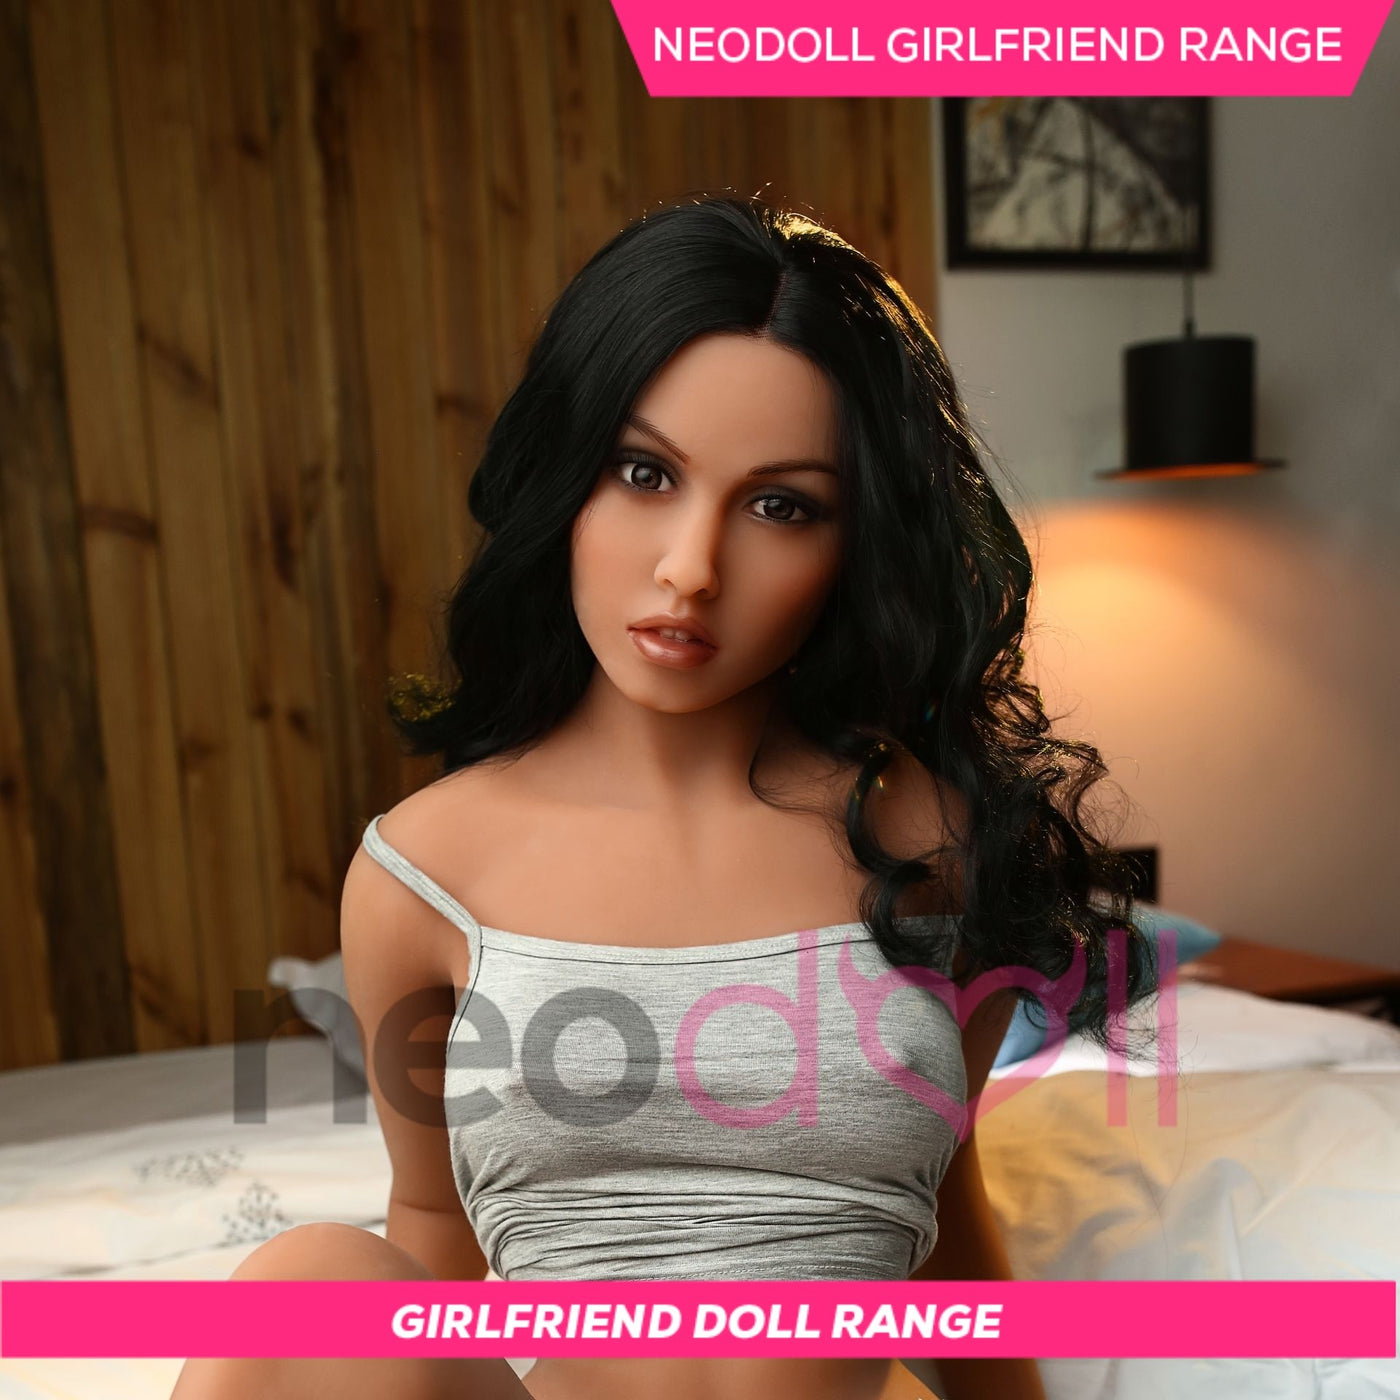 Neodoll - Rosie 158cm - Red - Girlfriend Range - Realistic Doll - Tan